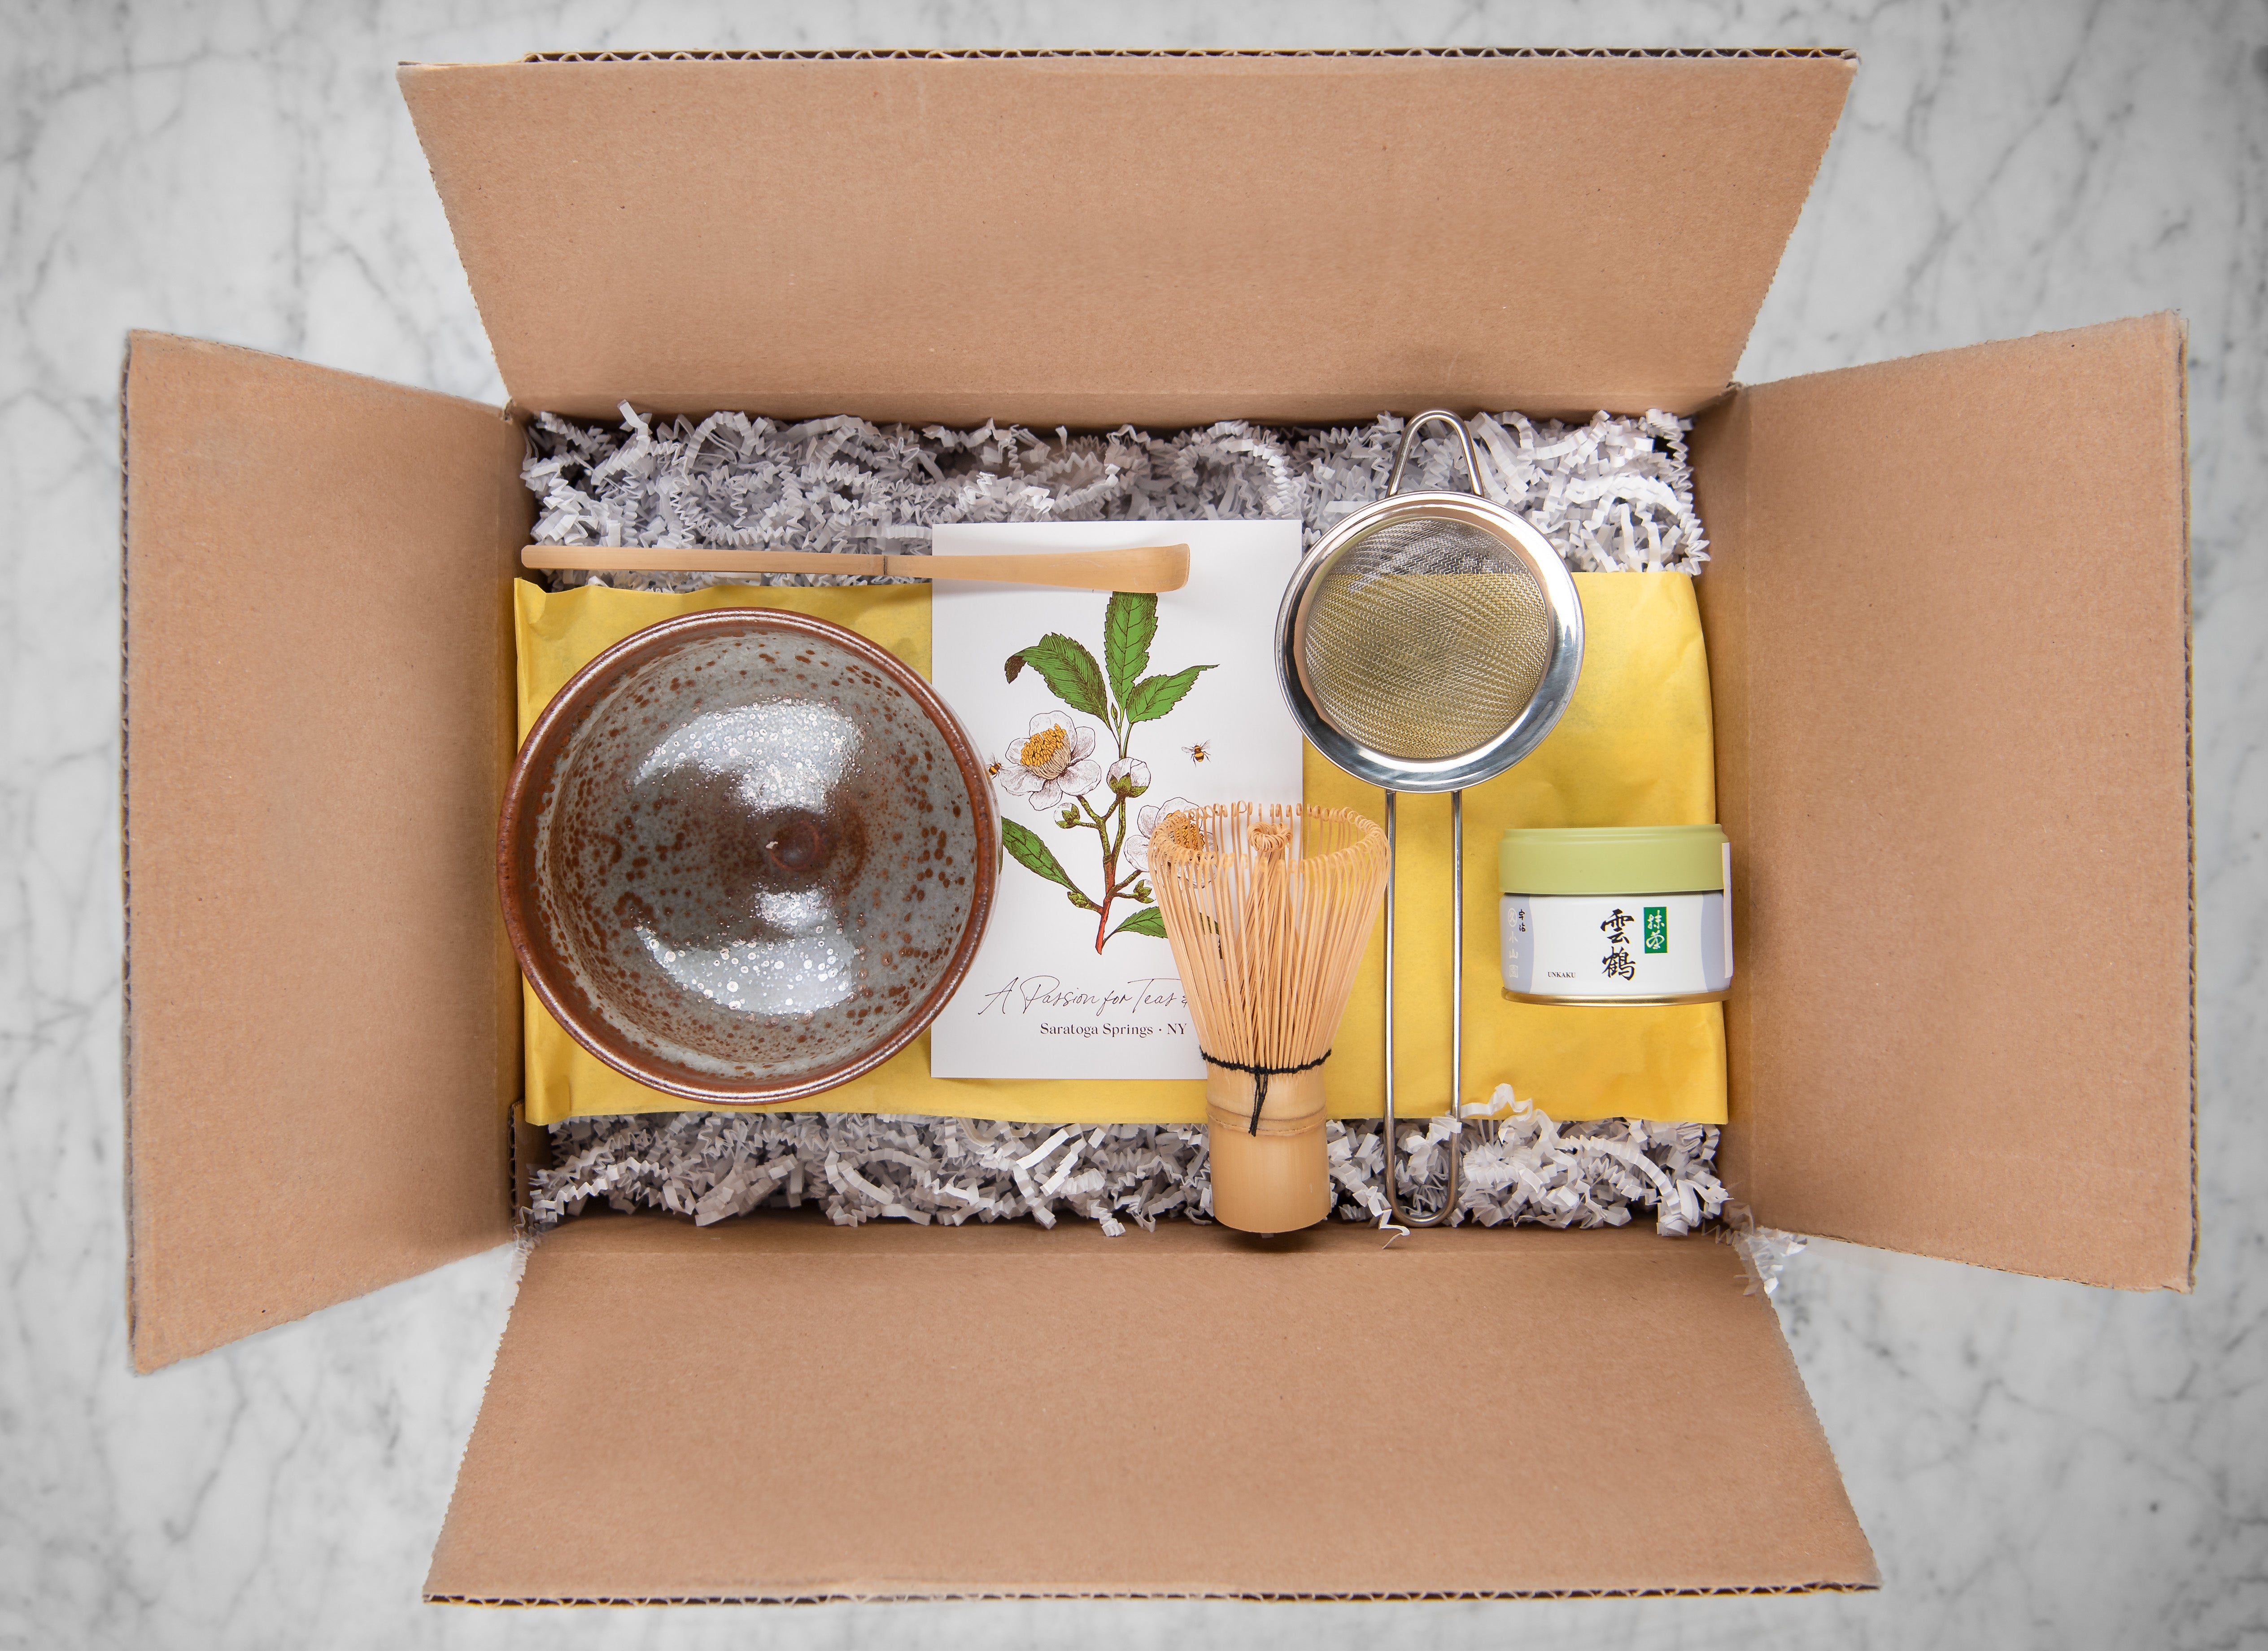 Matcha Kits & Gifts - Ceremonial and Matcha Latte Gift Sets